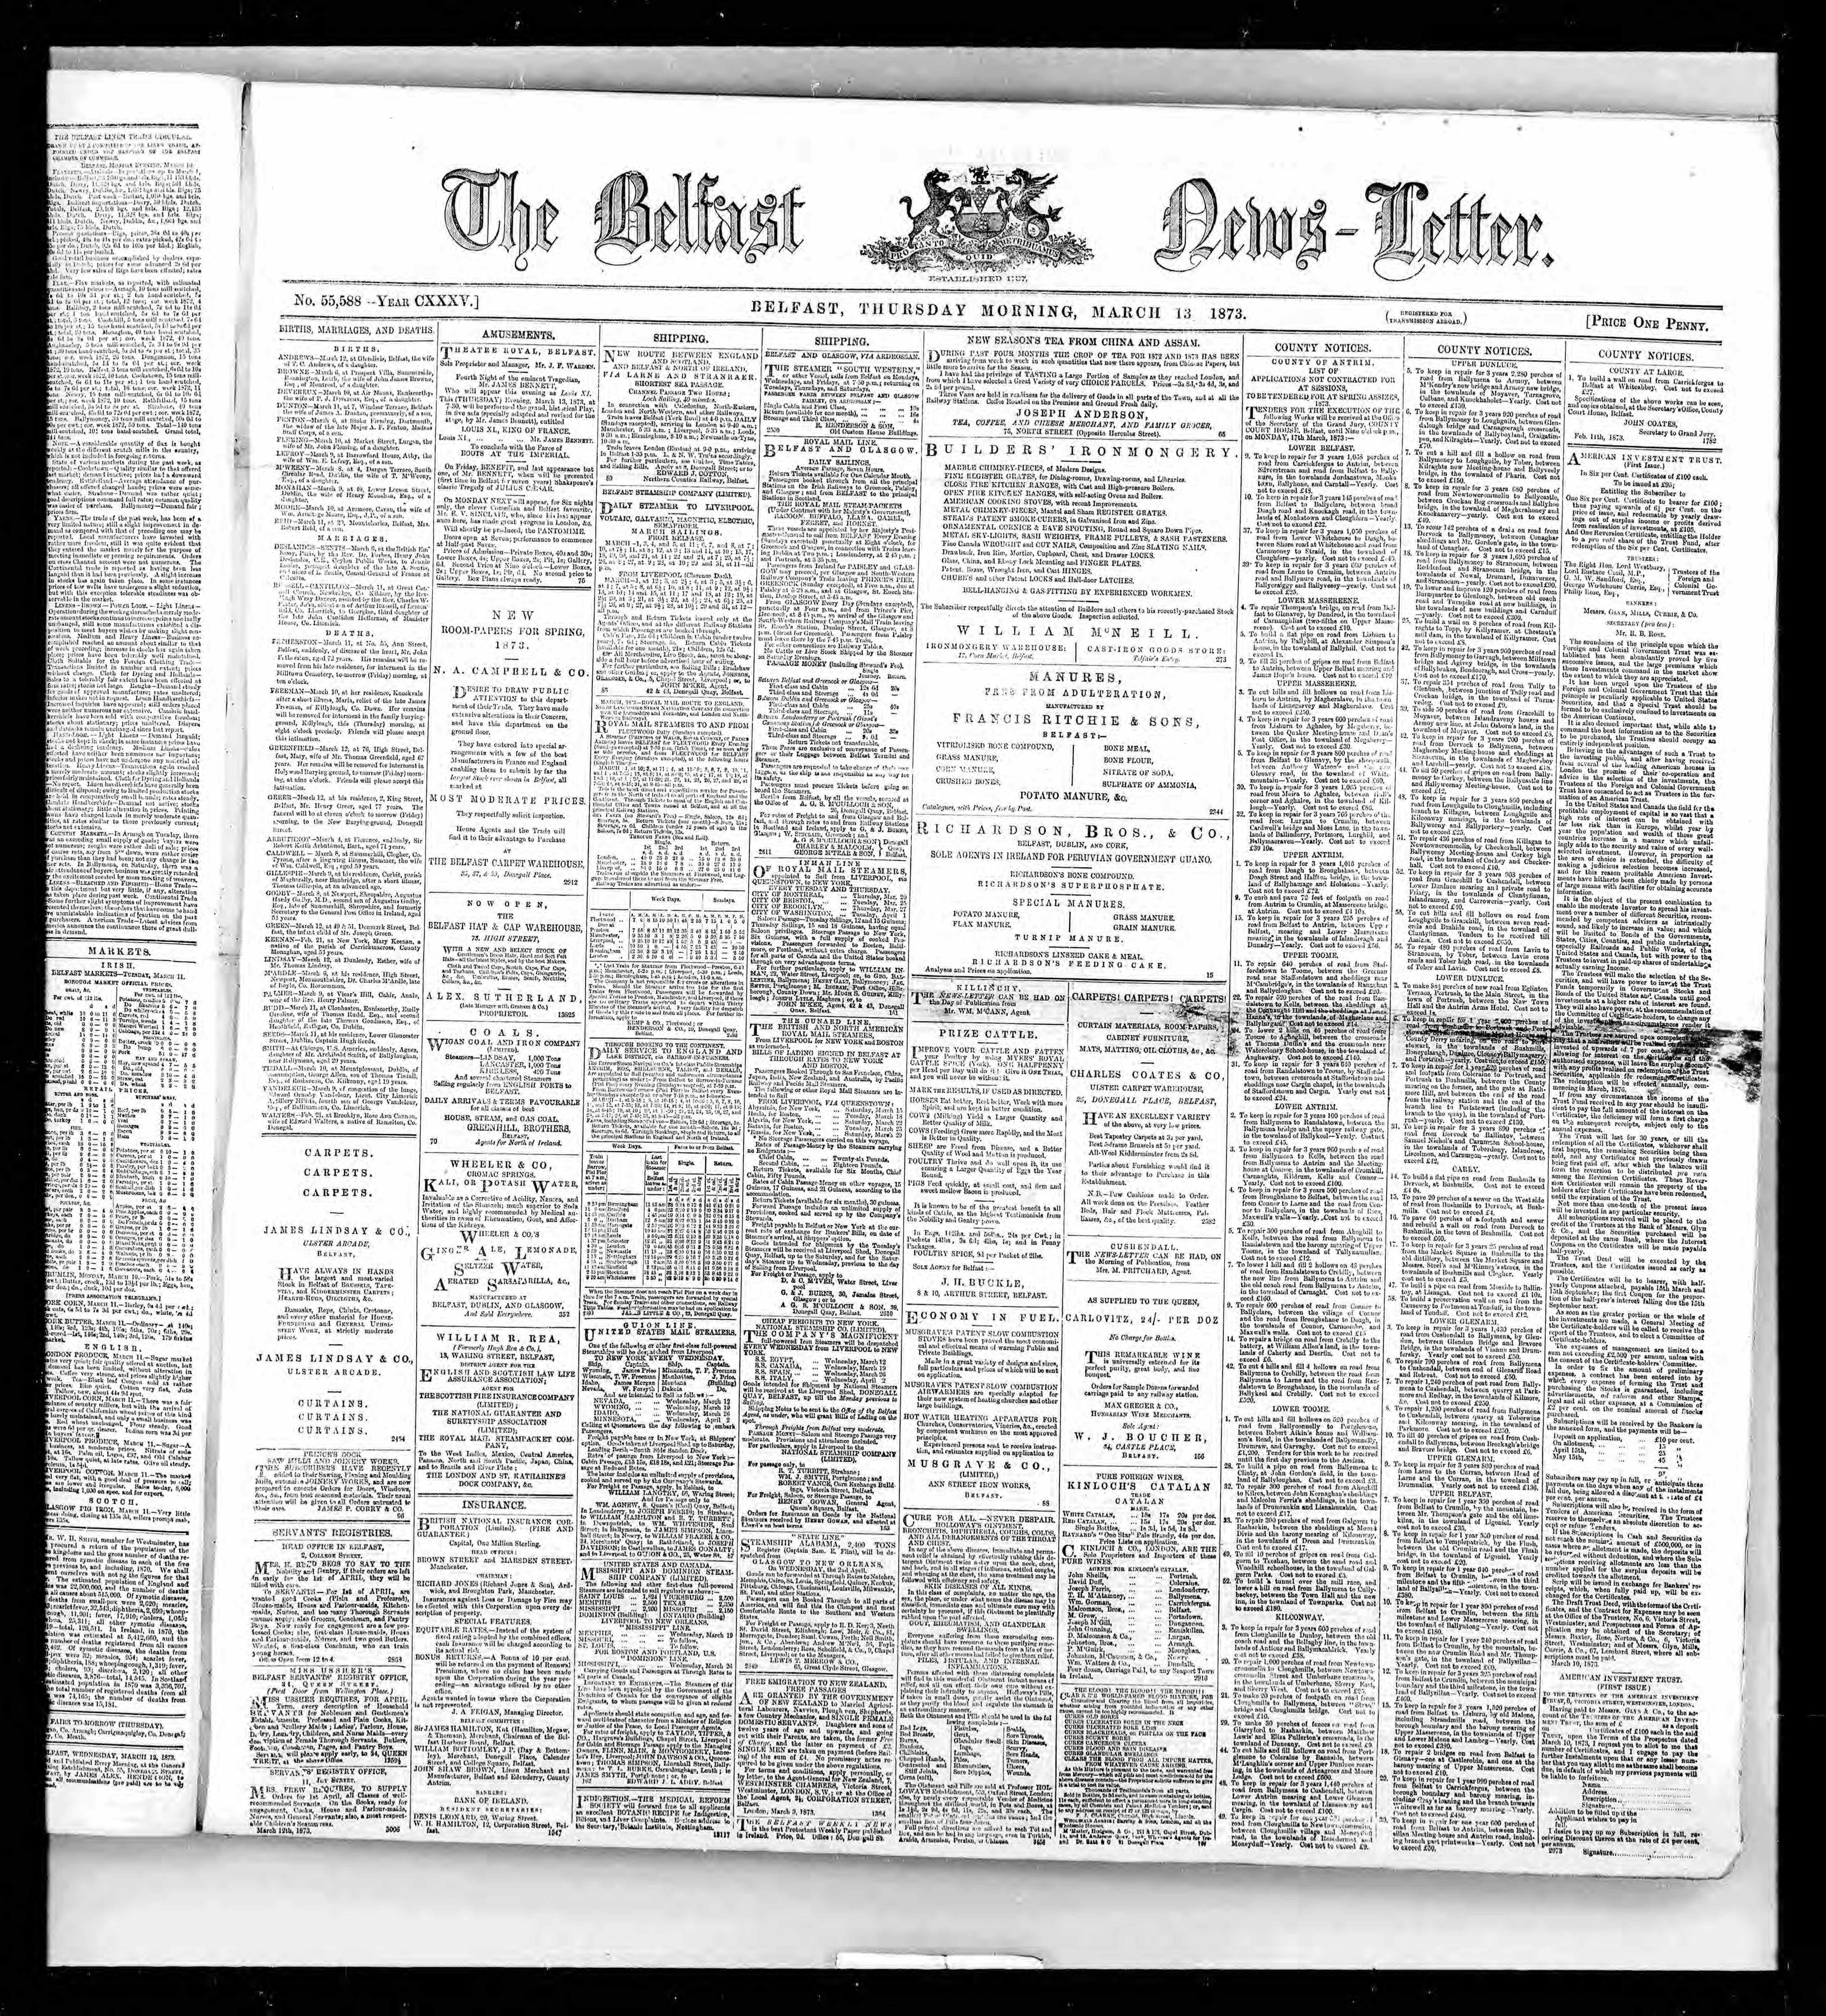 Belfast, Northern Ireland, The Belfast Newsletter (Birth, Marriage and Death Notices), 1738-1925